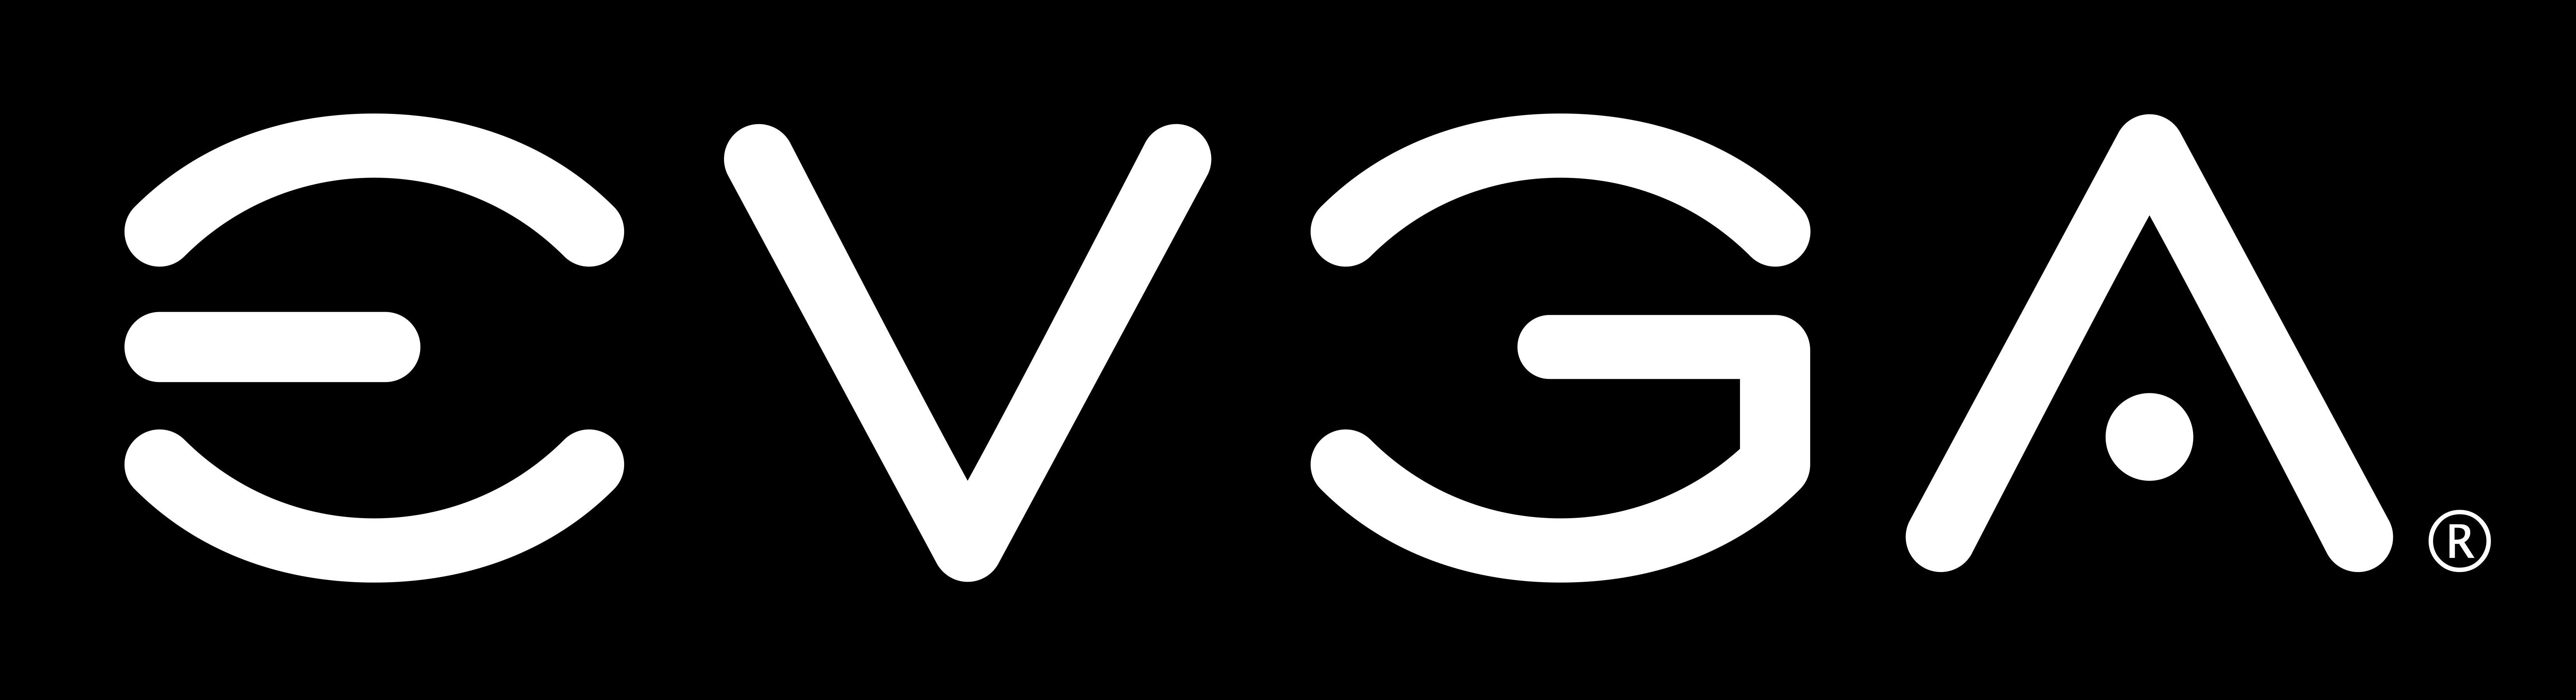 Intelligent Black and White Logo - EVGA - Intelligent Innovation - Marketing